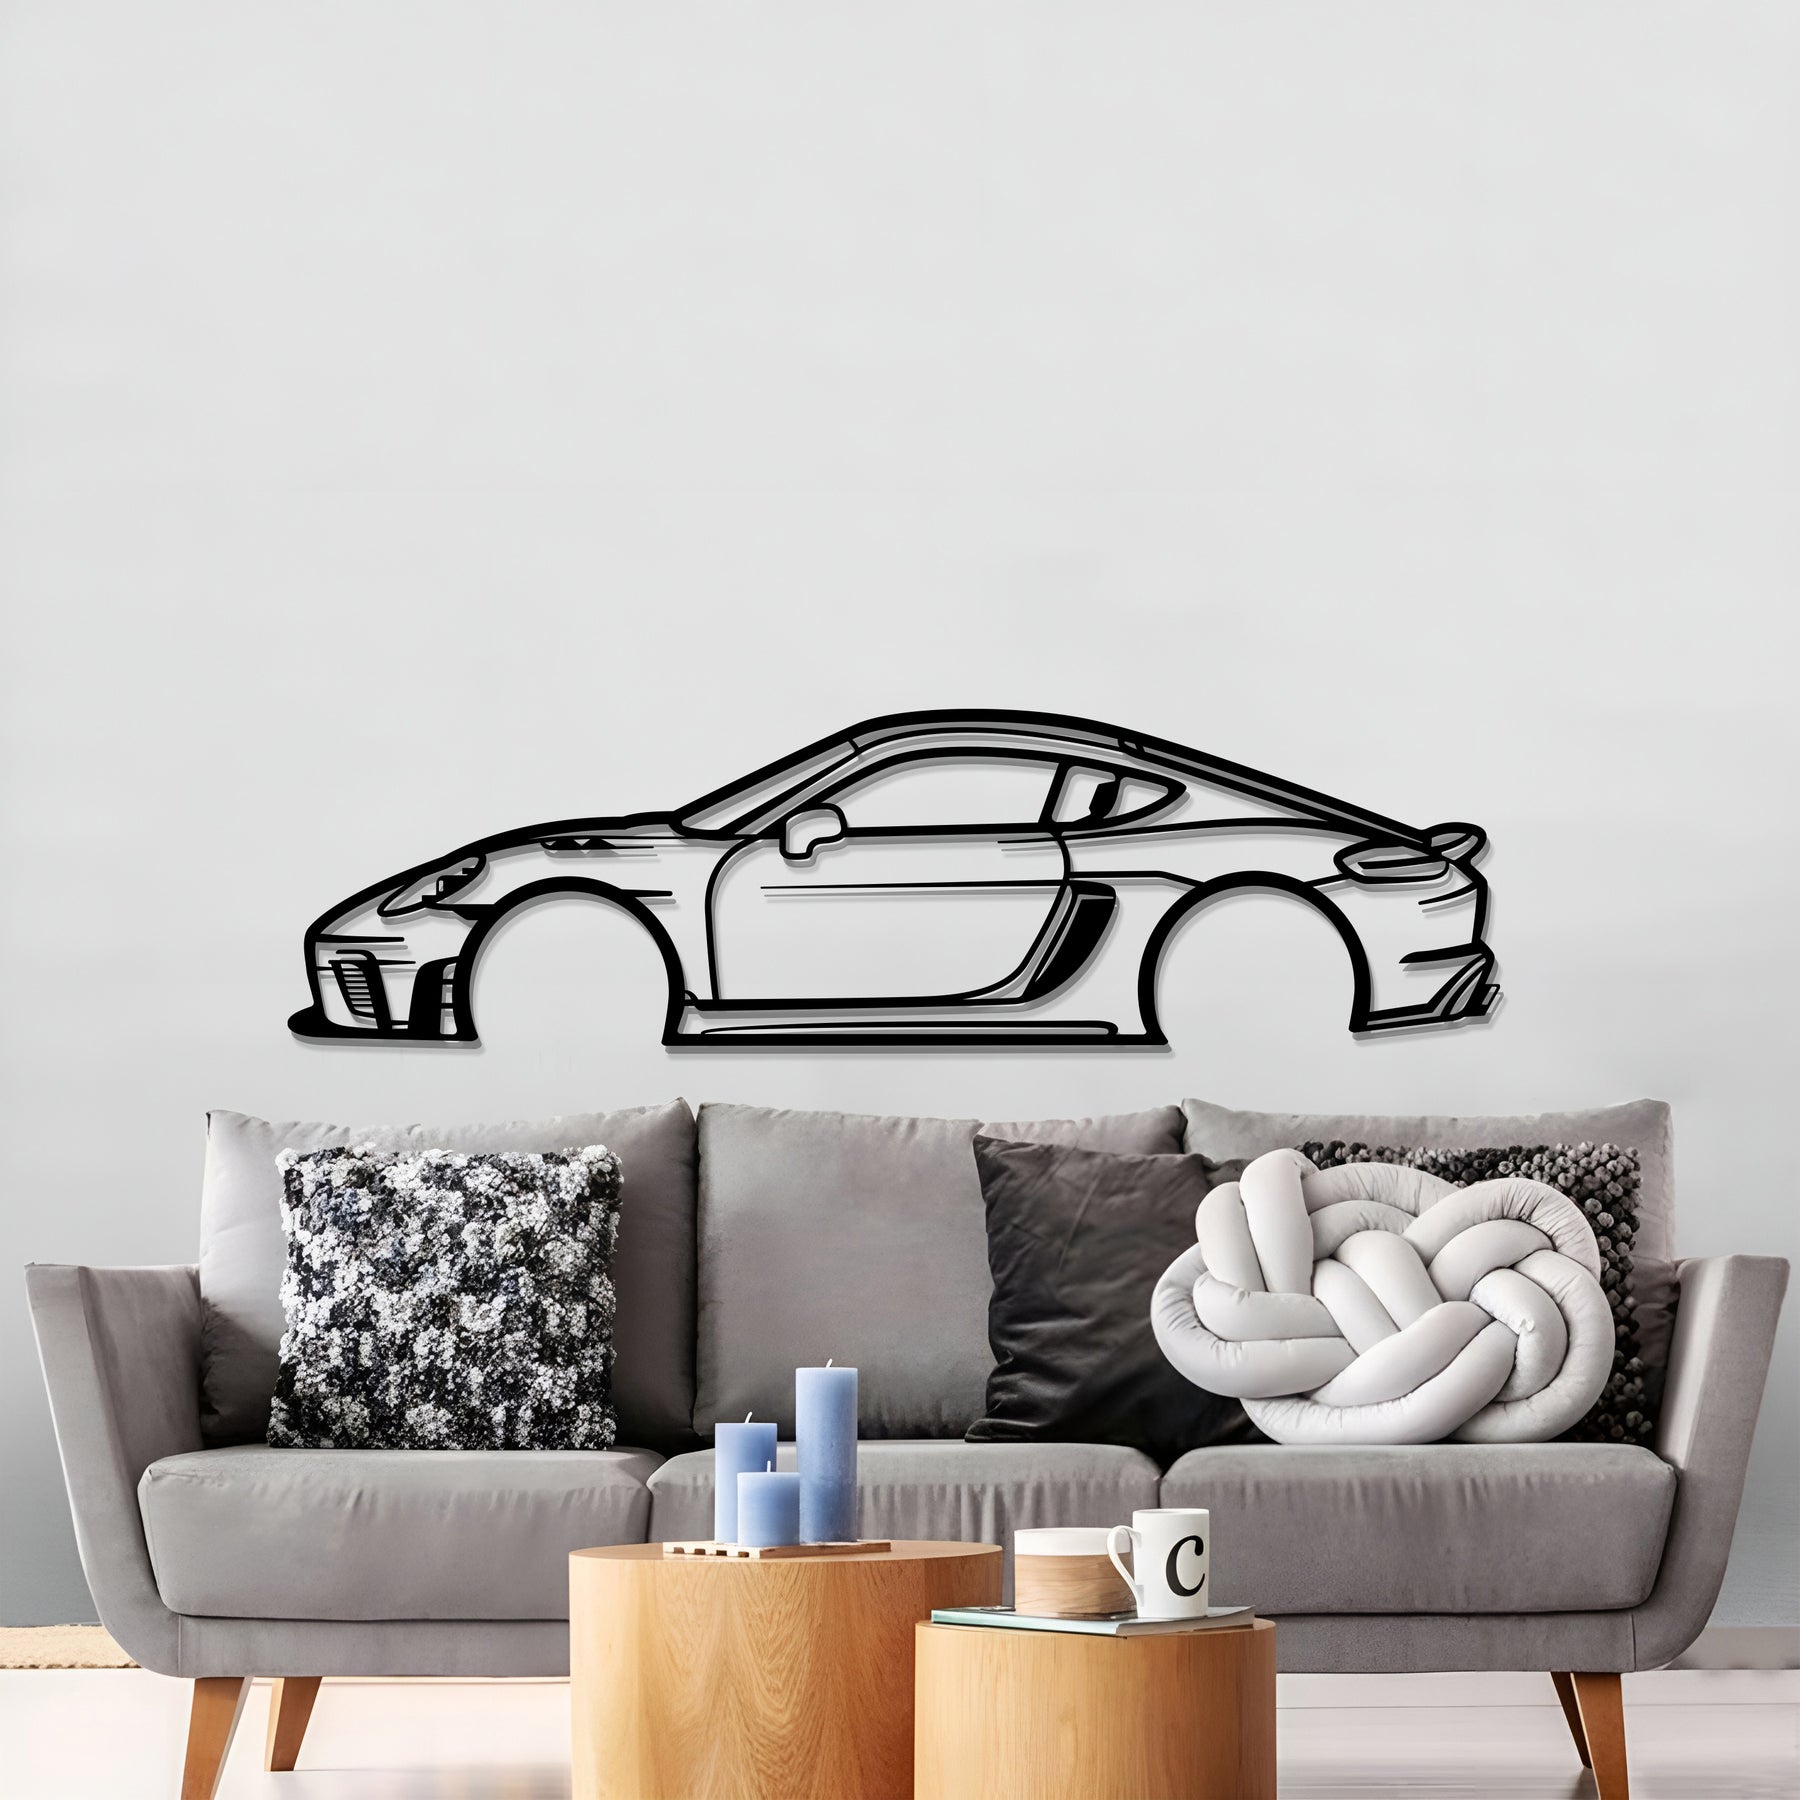 2020 Cayman 718 GT4RS Metal Car Wall Art - MT0695